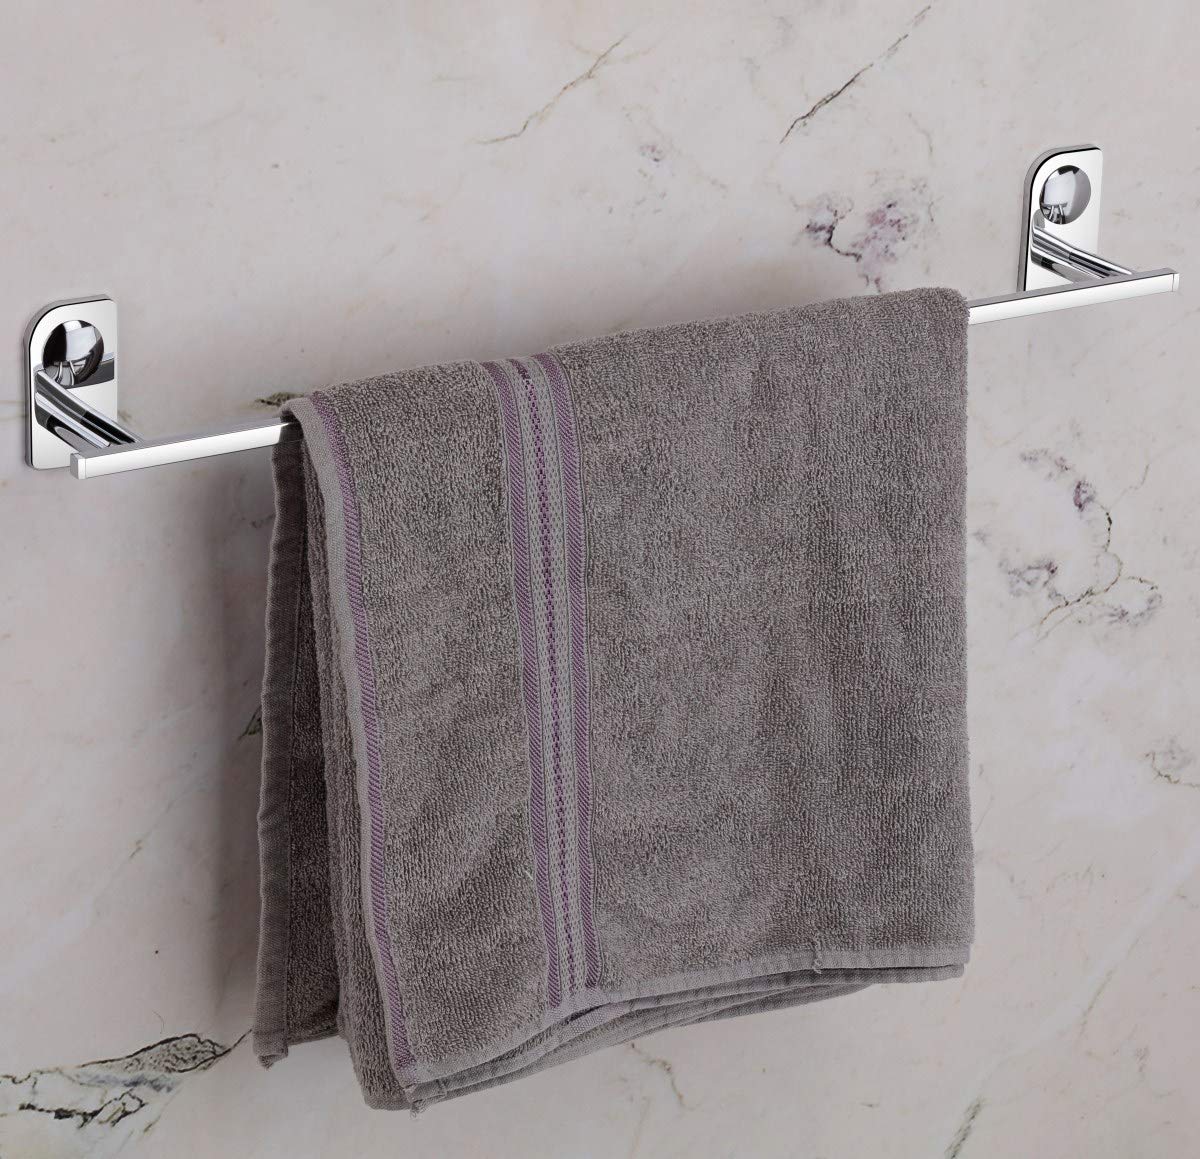 Plantex Dream Stainless Steel Towel Hanger for Bathroom/Towel Rod/Bar/Bathroom Accessories (24inch) - Chrome - Pack of 4